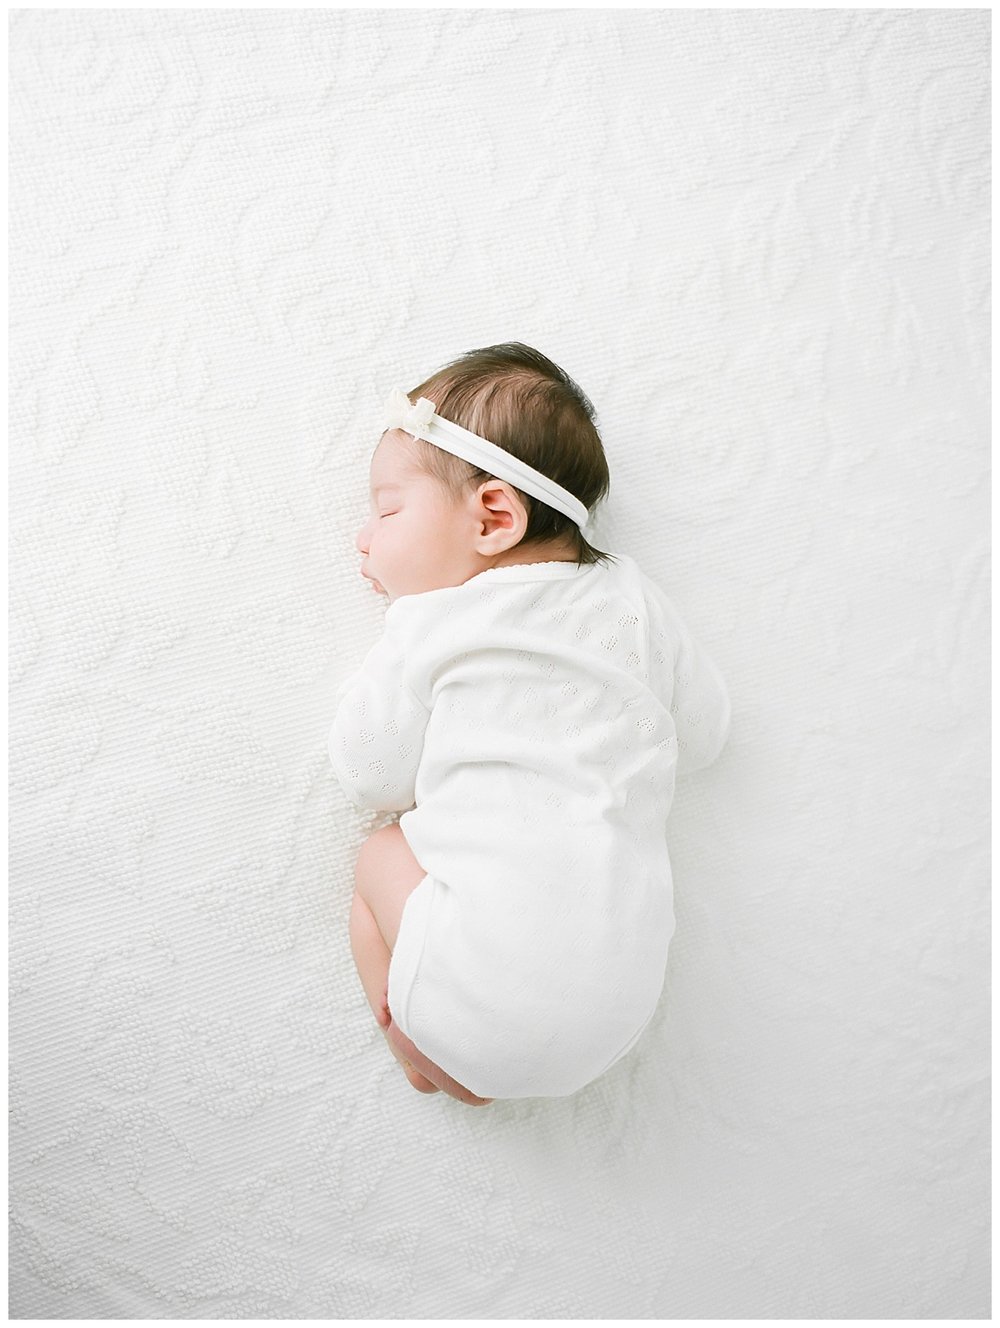 Central-Illinois-newborn- baby-Lifestyle-studio-photographer-Champaign-Urbana-Fisher_0800.jpg